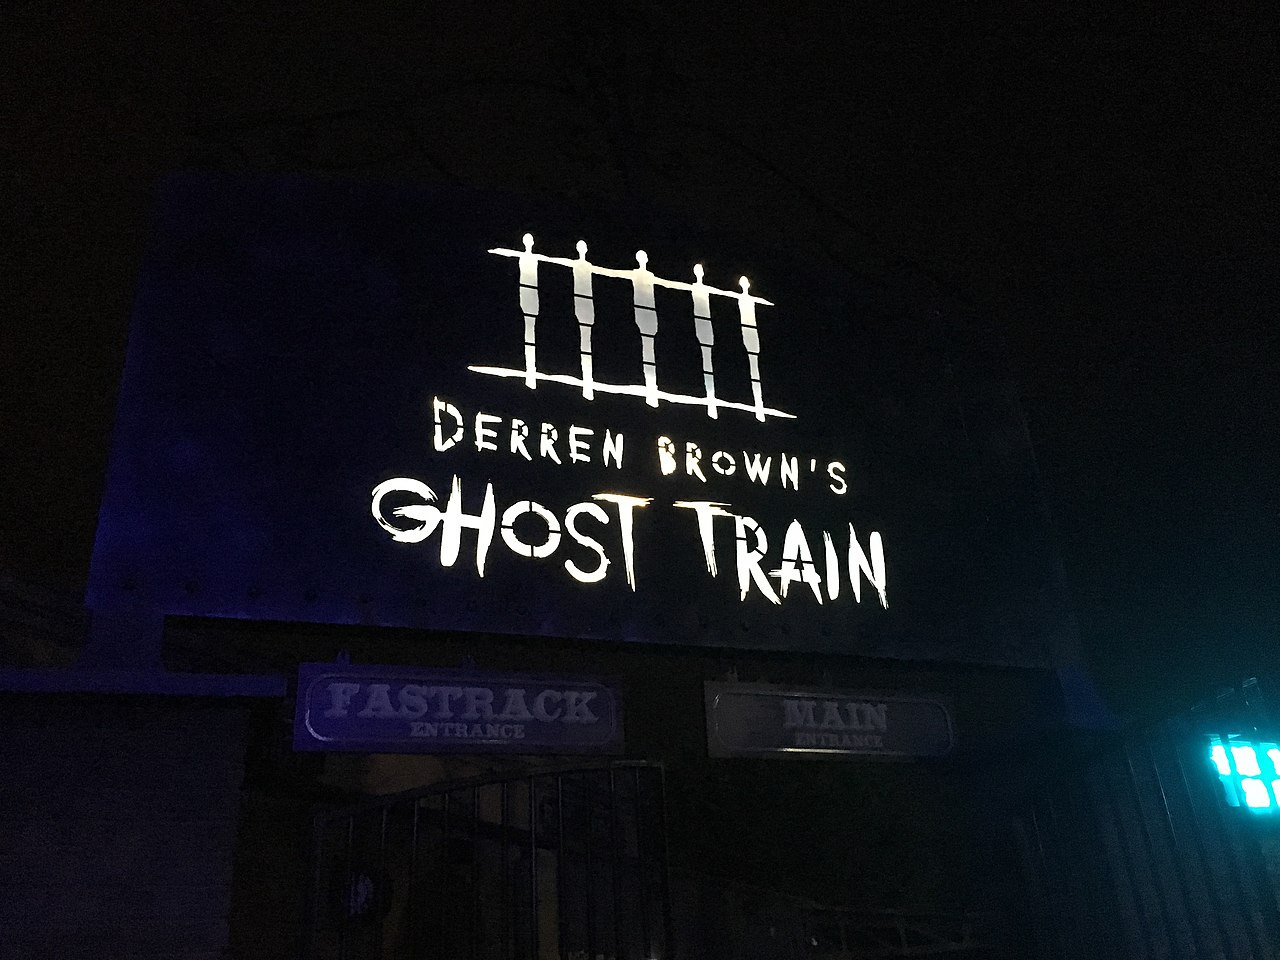 https://upload.wikimedia.org/wikipedia/commons/thumb/5/5e/Derren_Brown%27s_Ghost_Train_.jpg/1280px-Derren_Brown%27s_Ghost_Train_.jpg